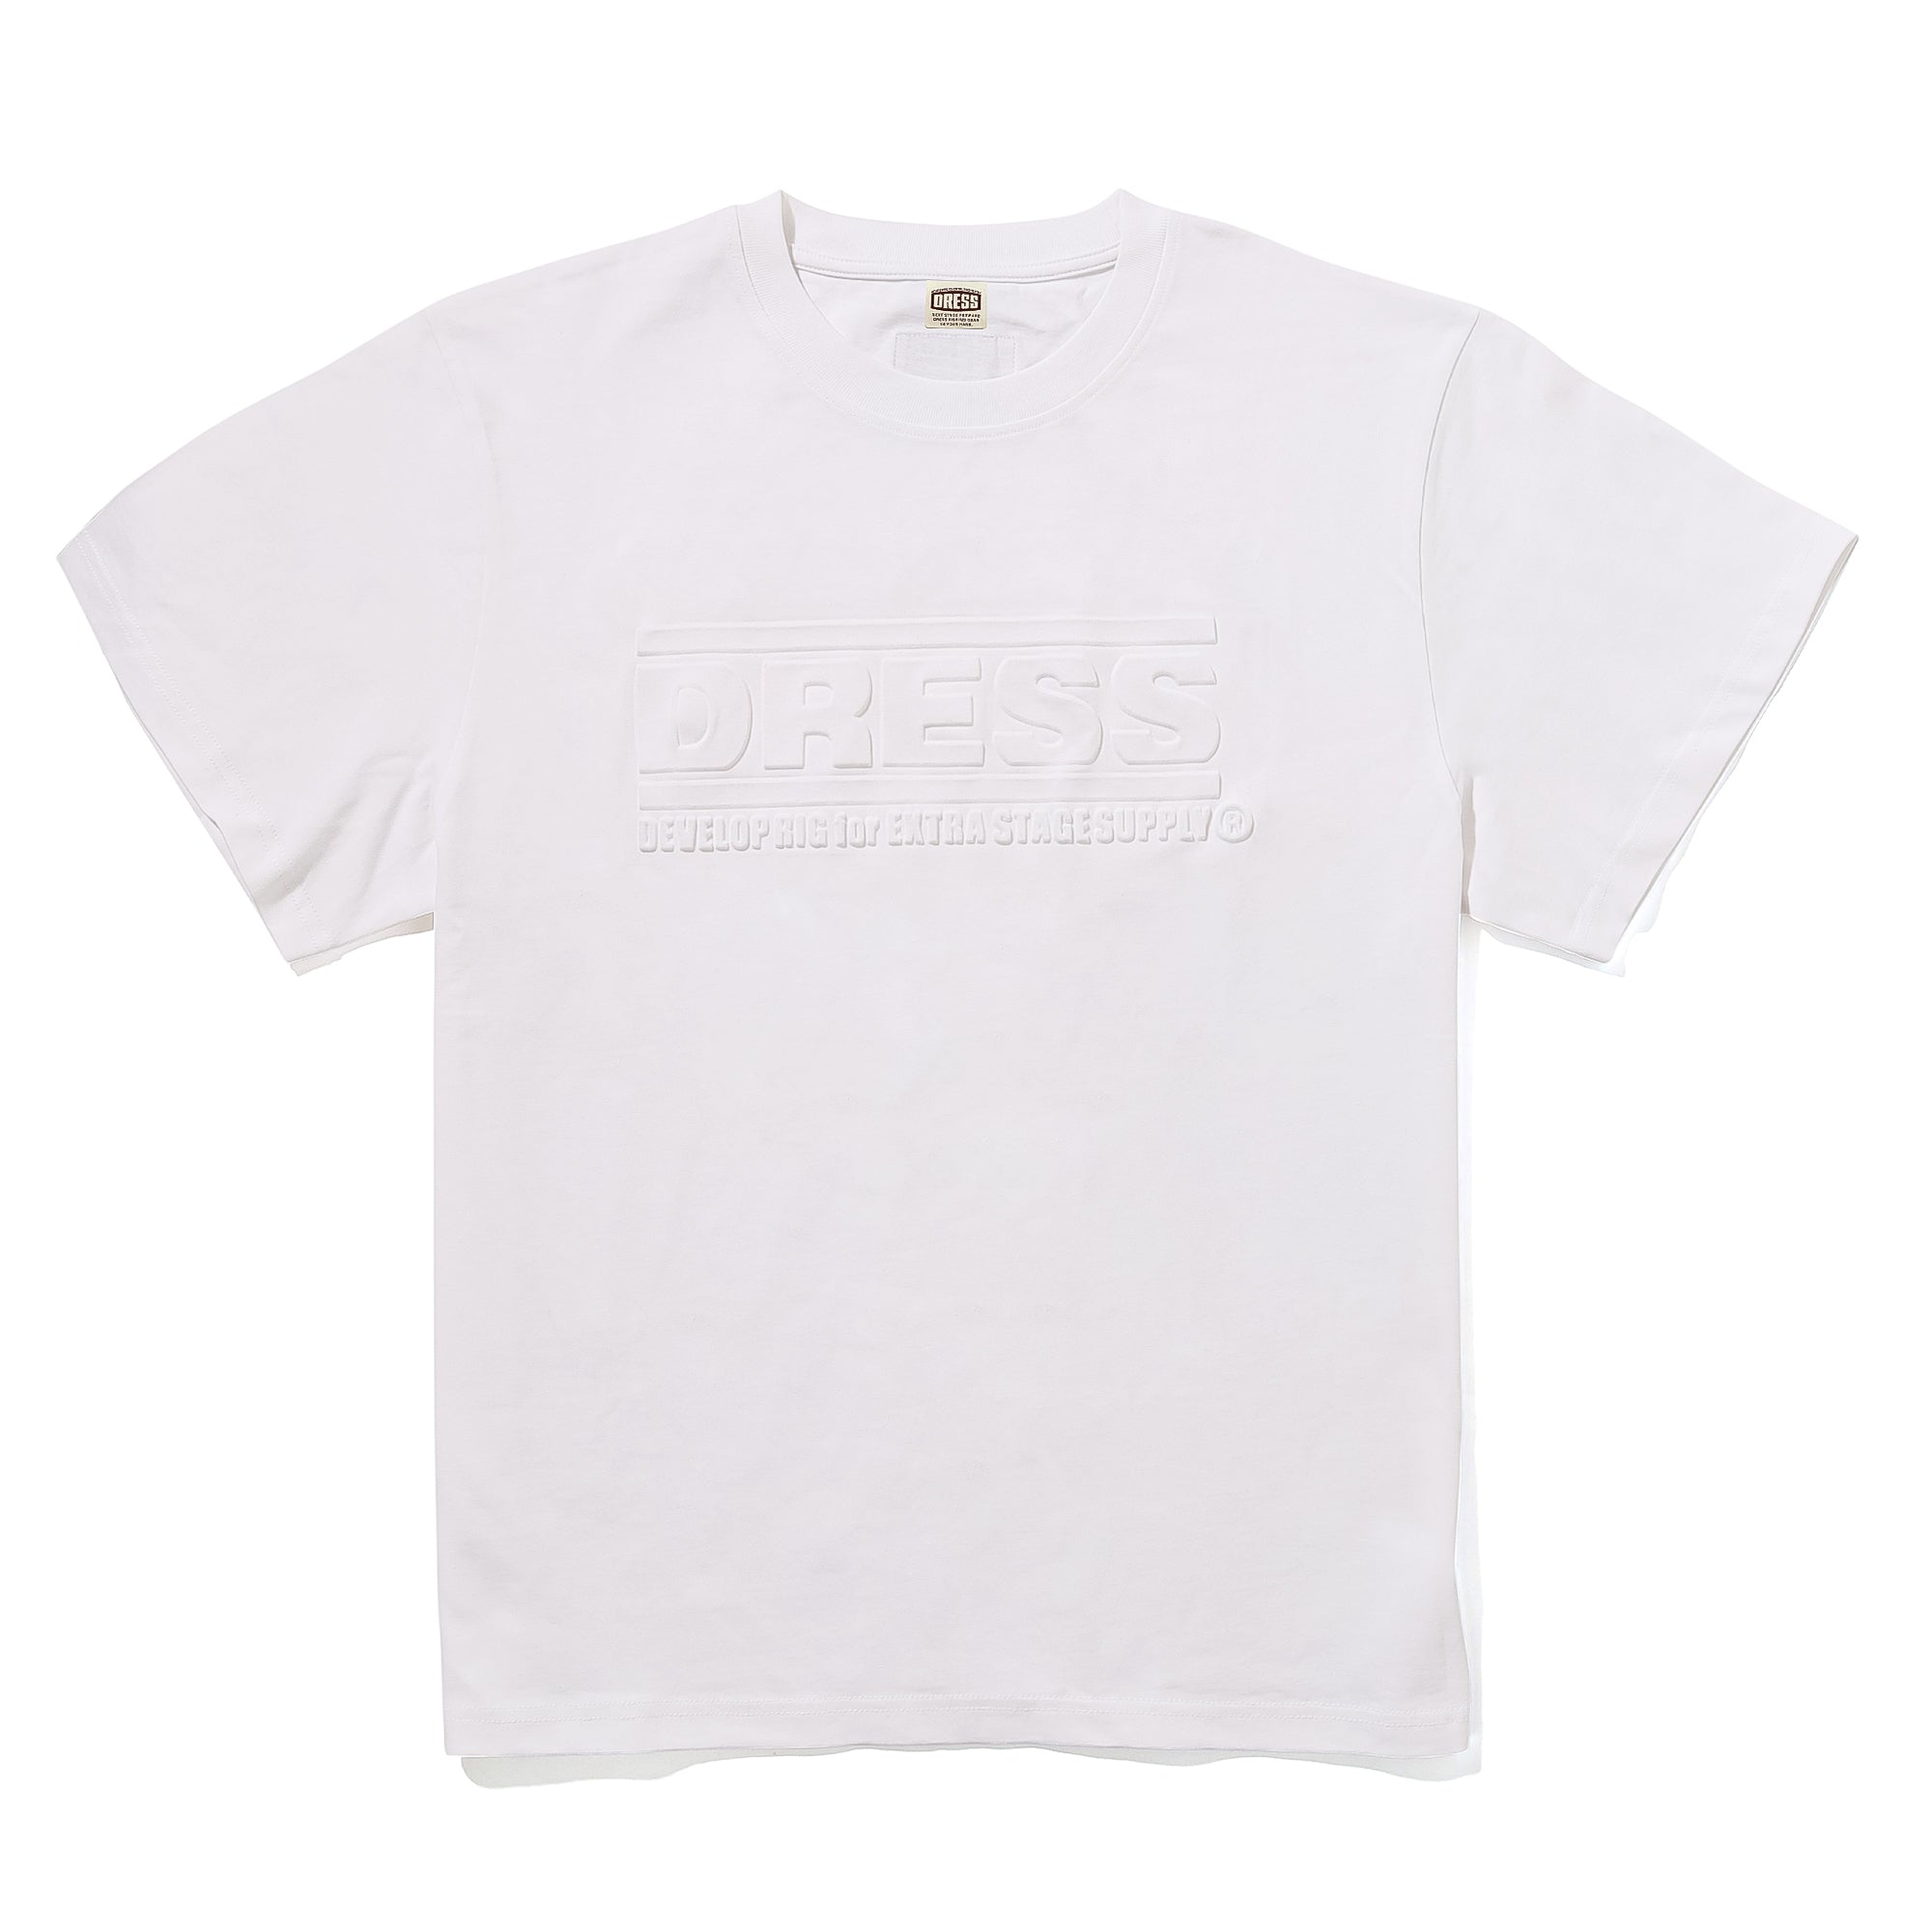 DRESS エンボスロゴ Tシャツ【ホワイト】